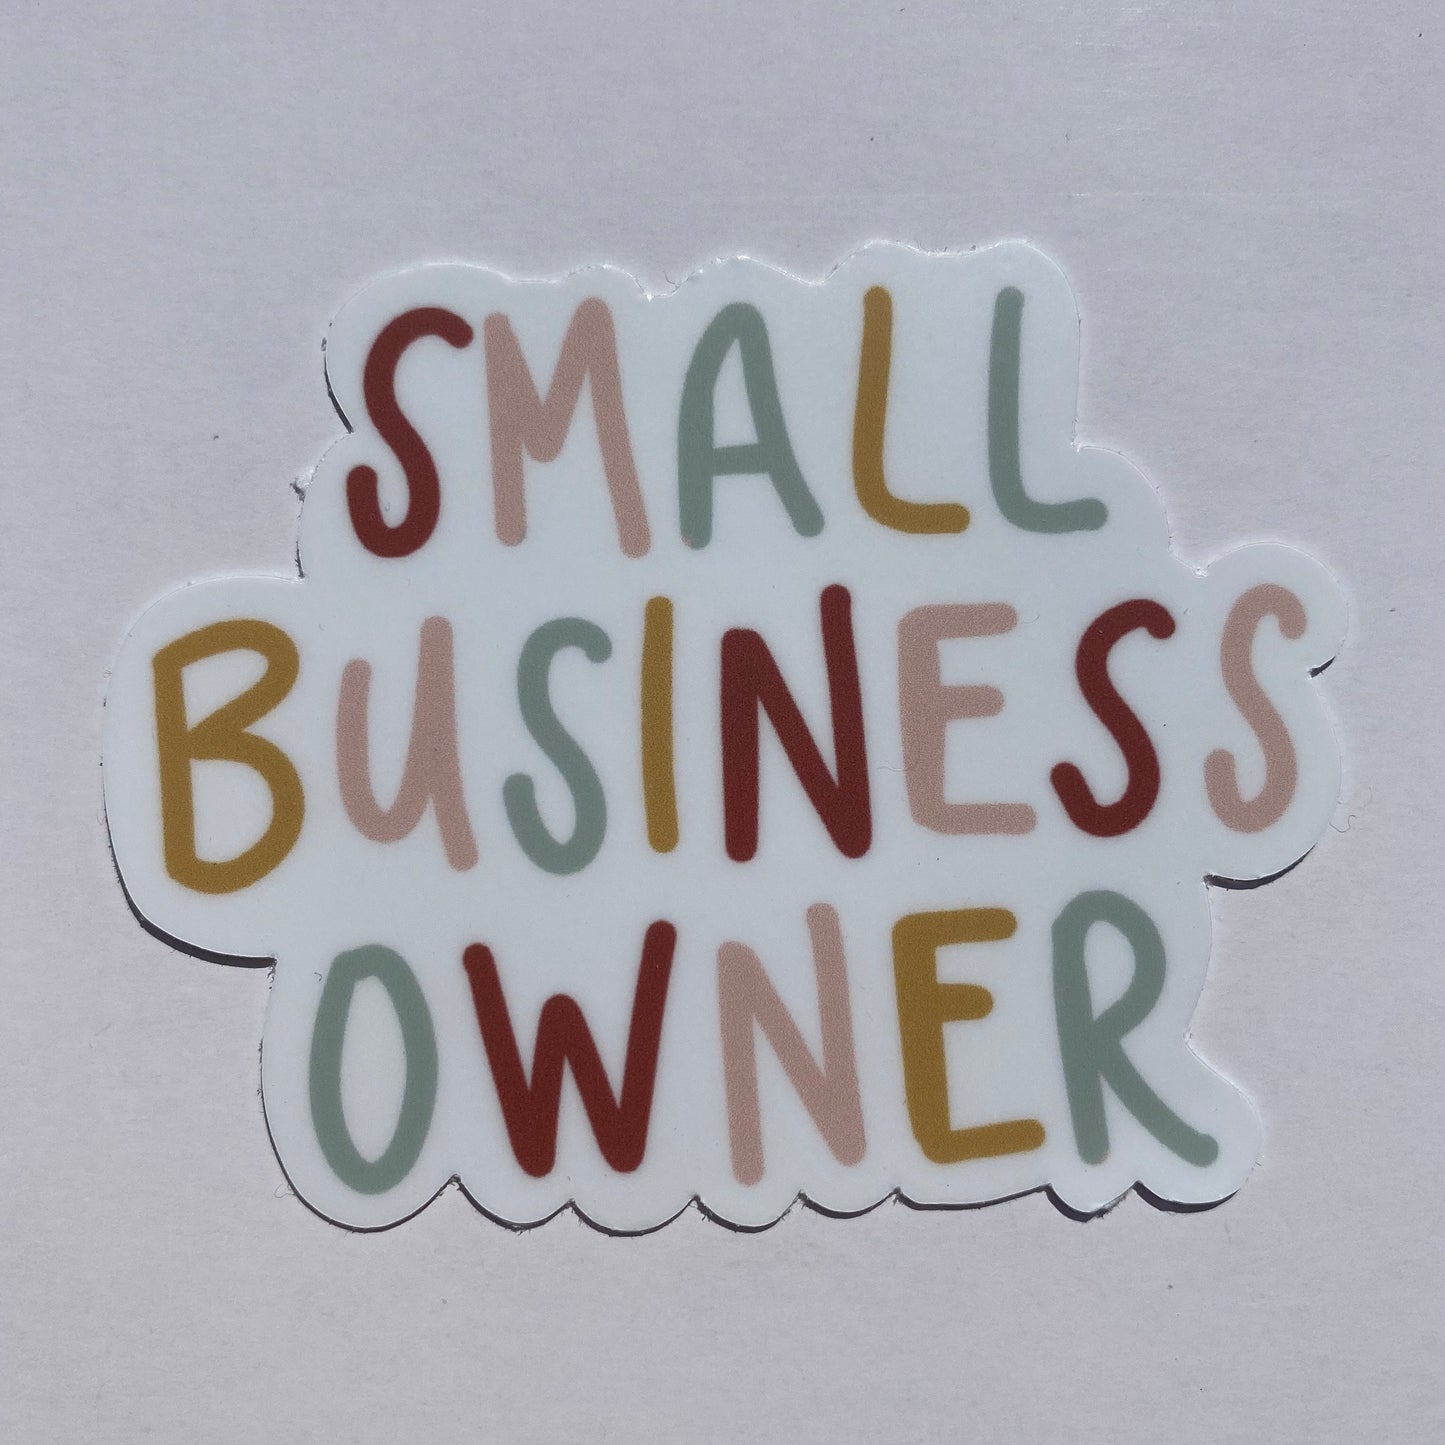 Signature Small Business Owner Waterproof Vinyl Sticker